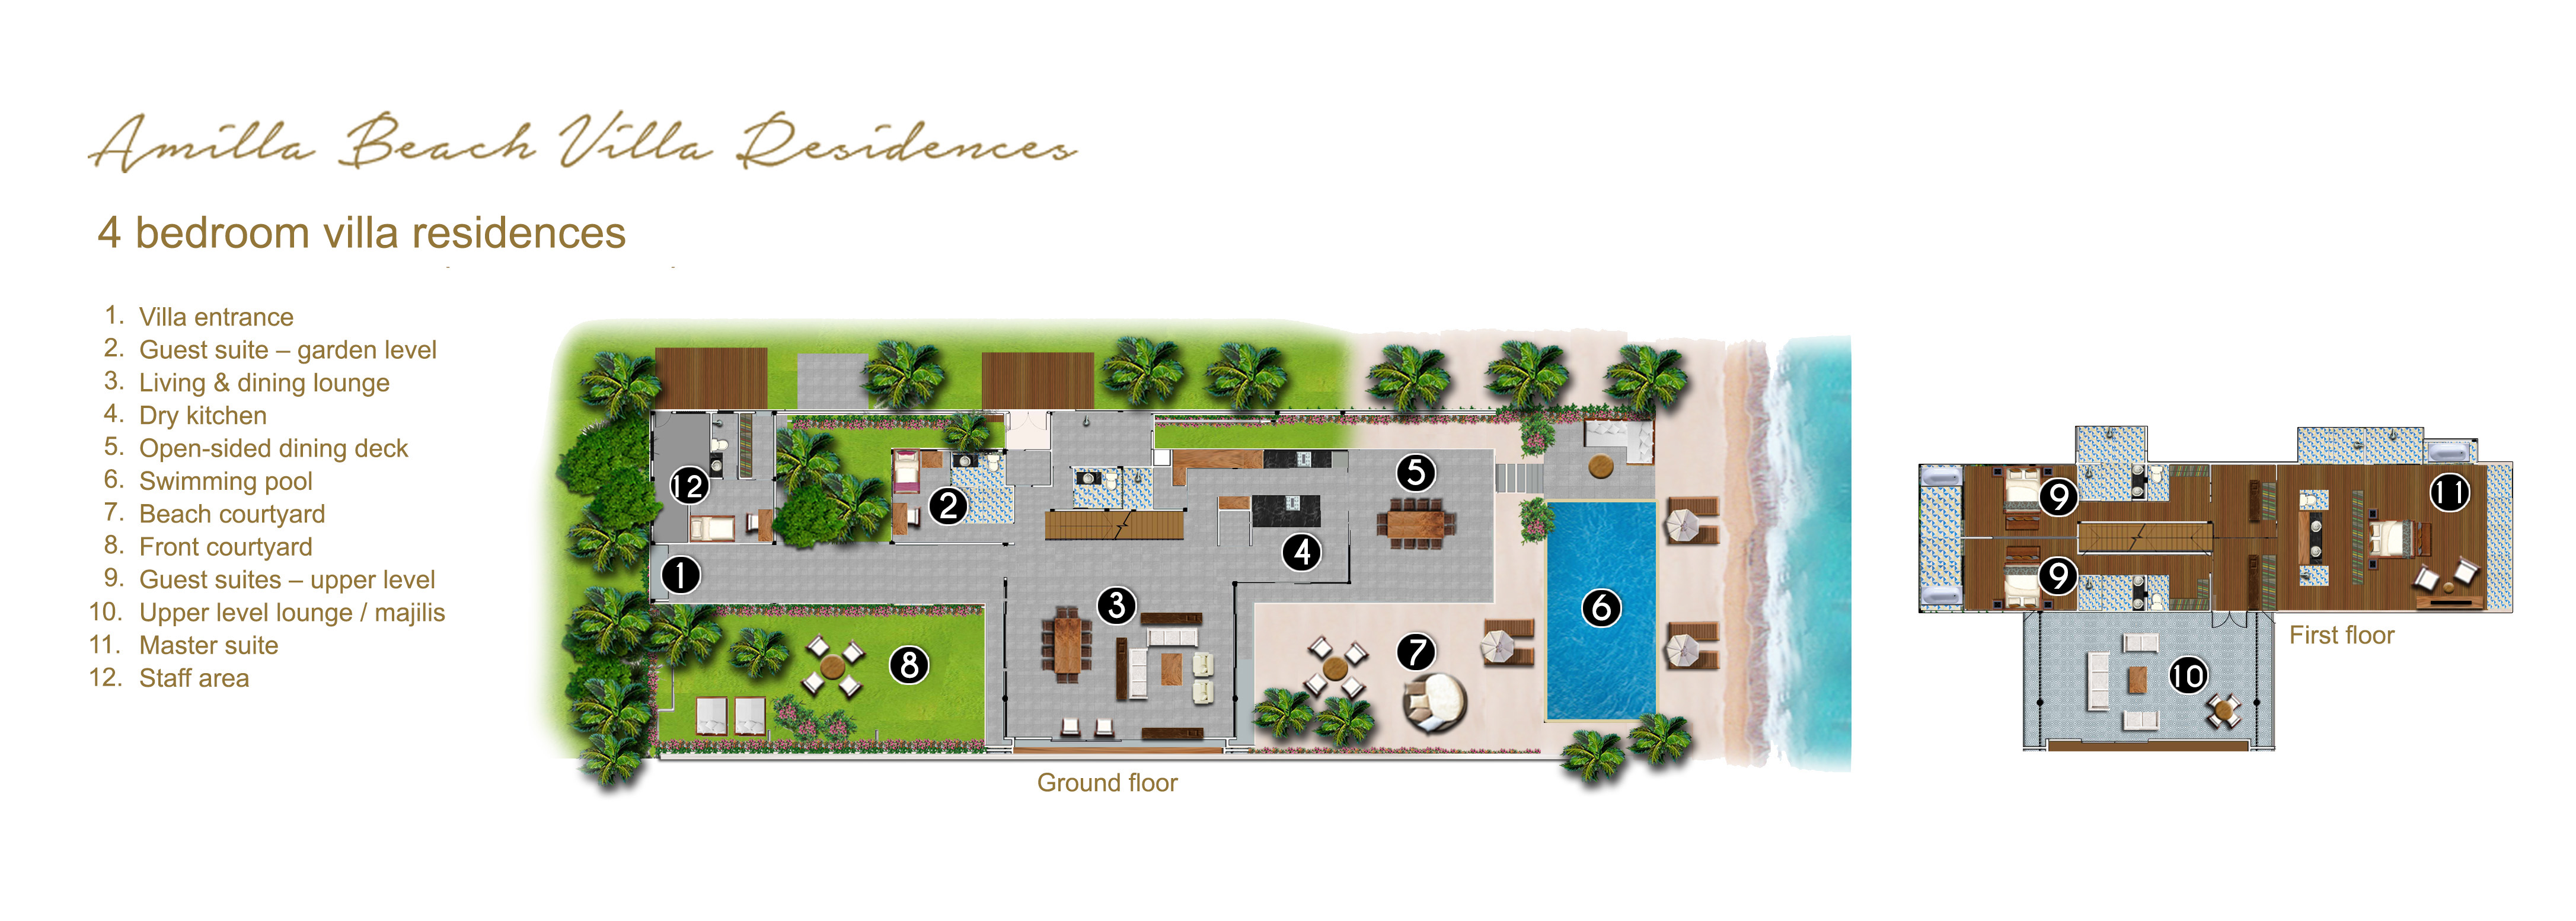 Amilla Beach Residences - 4 bedroom villa residences